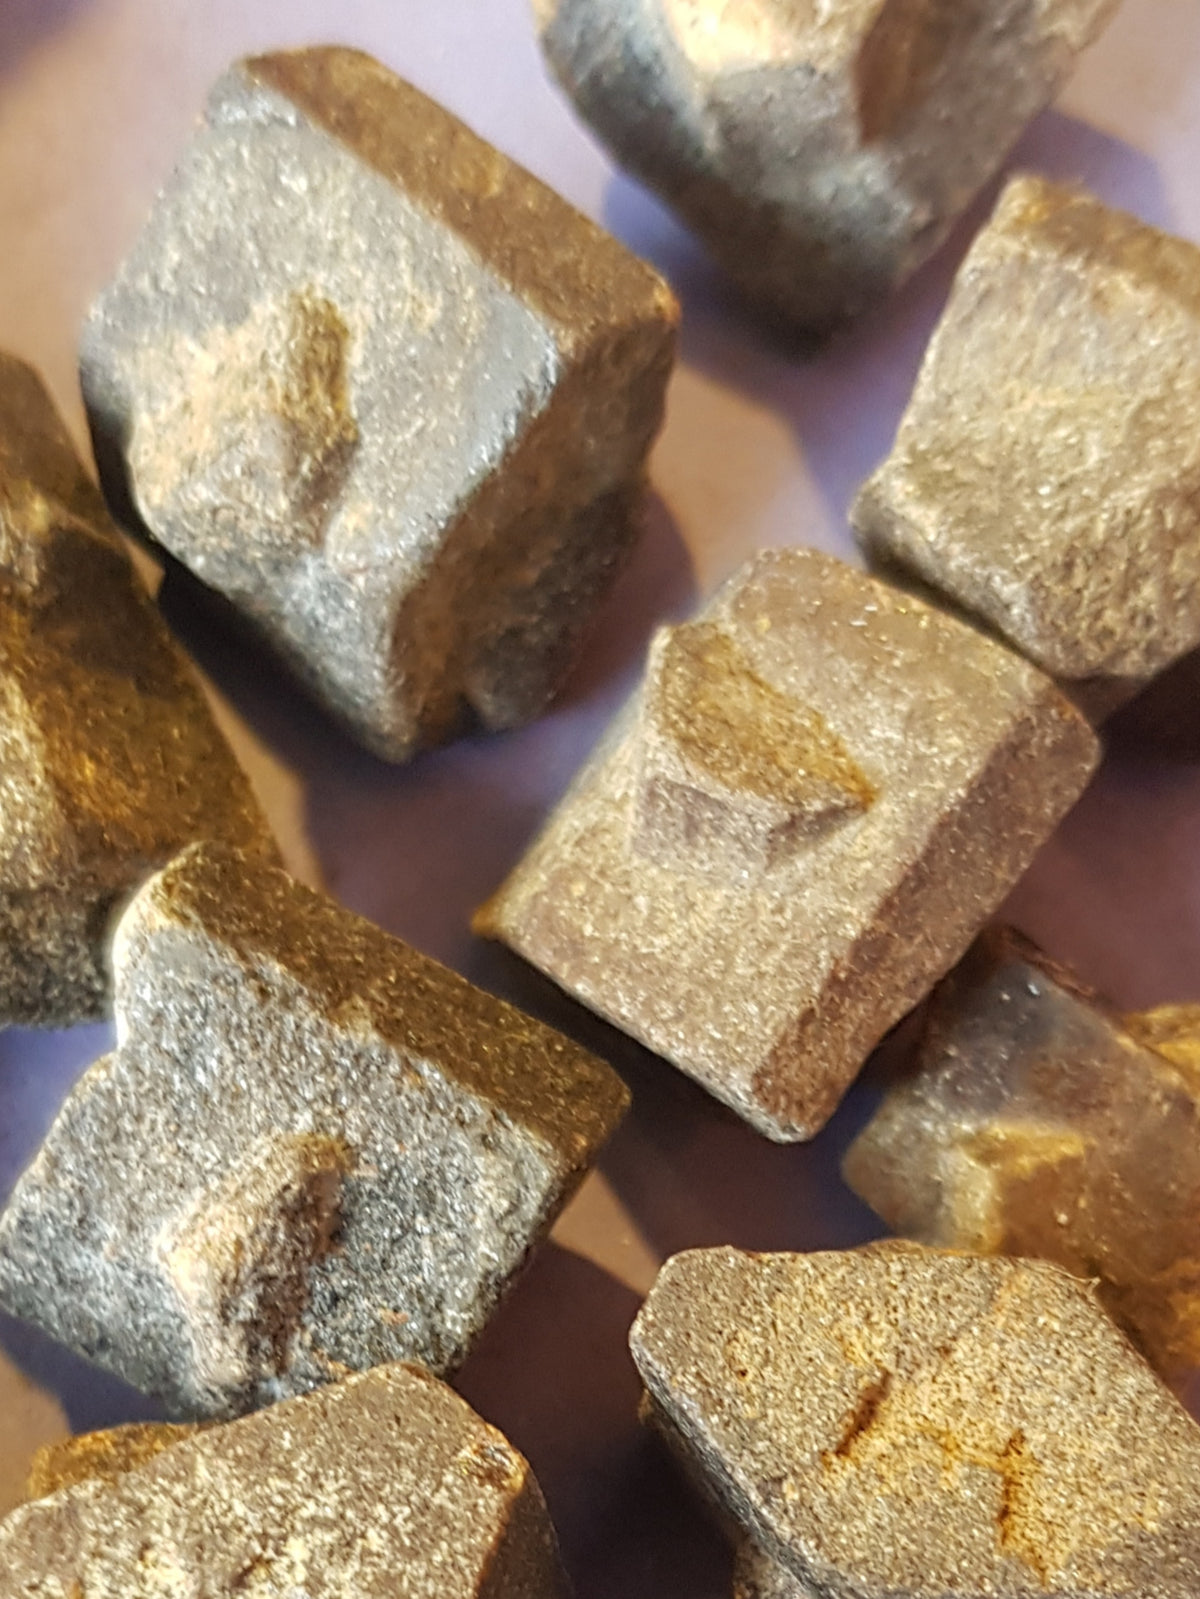 Twinned staurolite crystals - The Science of Magic 